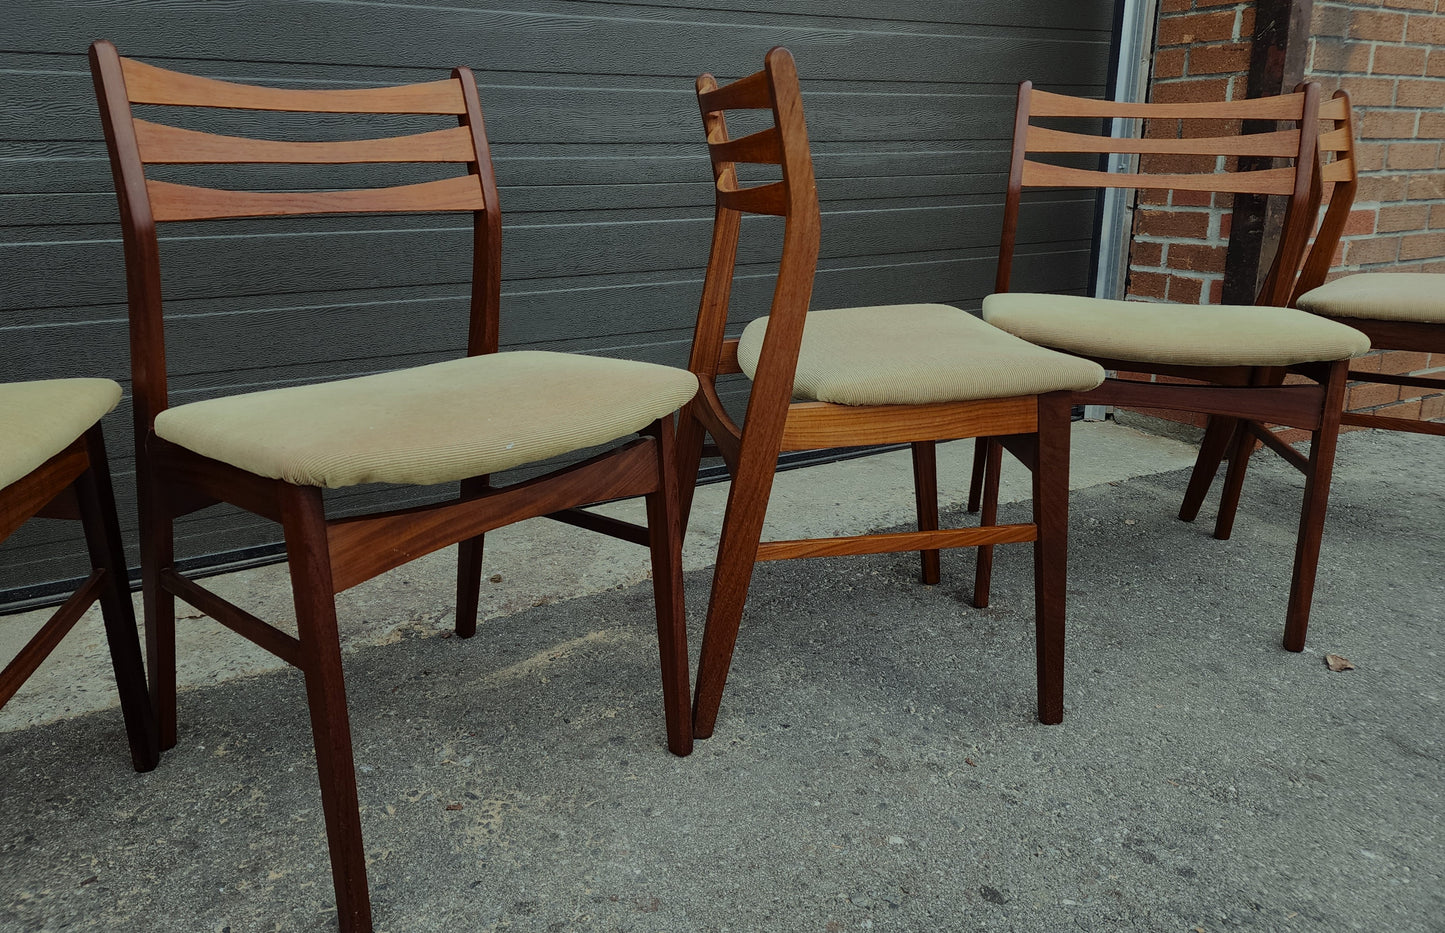 6 RESTORED Danish Mid Century Modern Teak Chairs will be REUPHOLSTERED